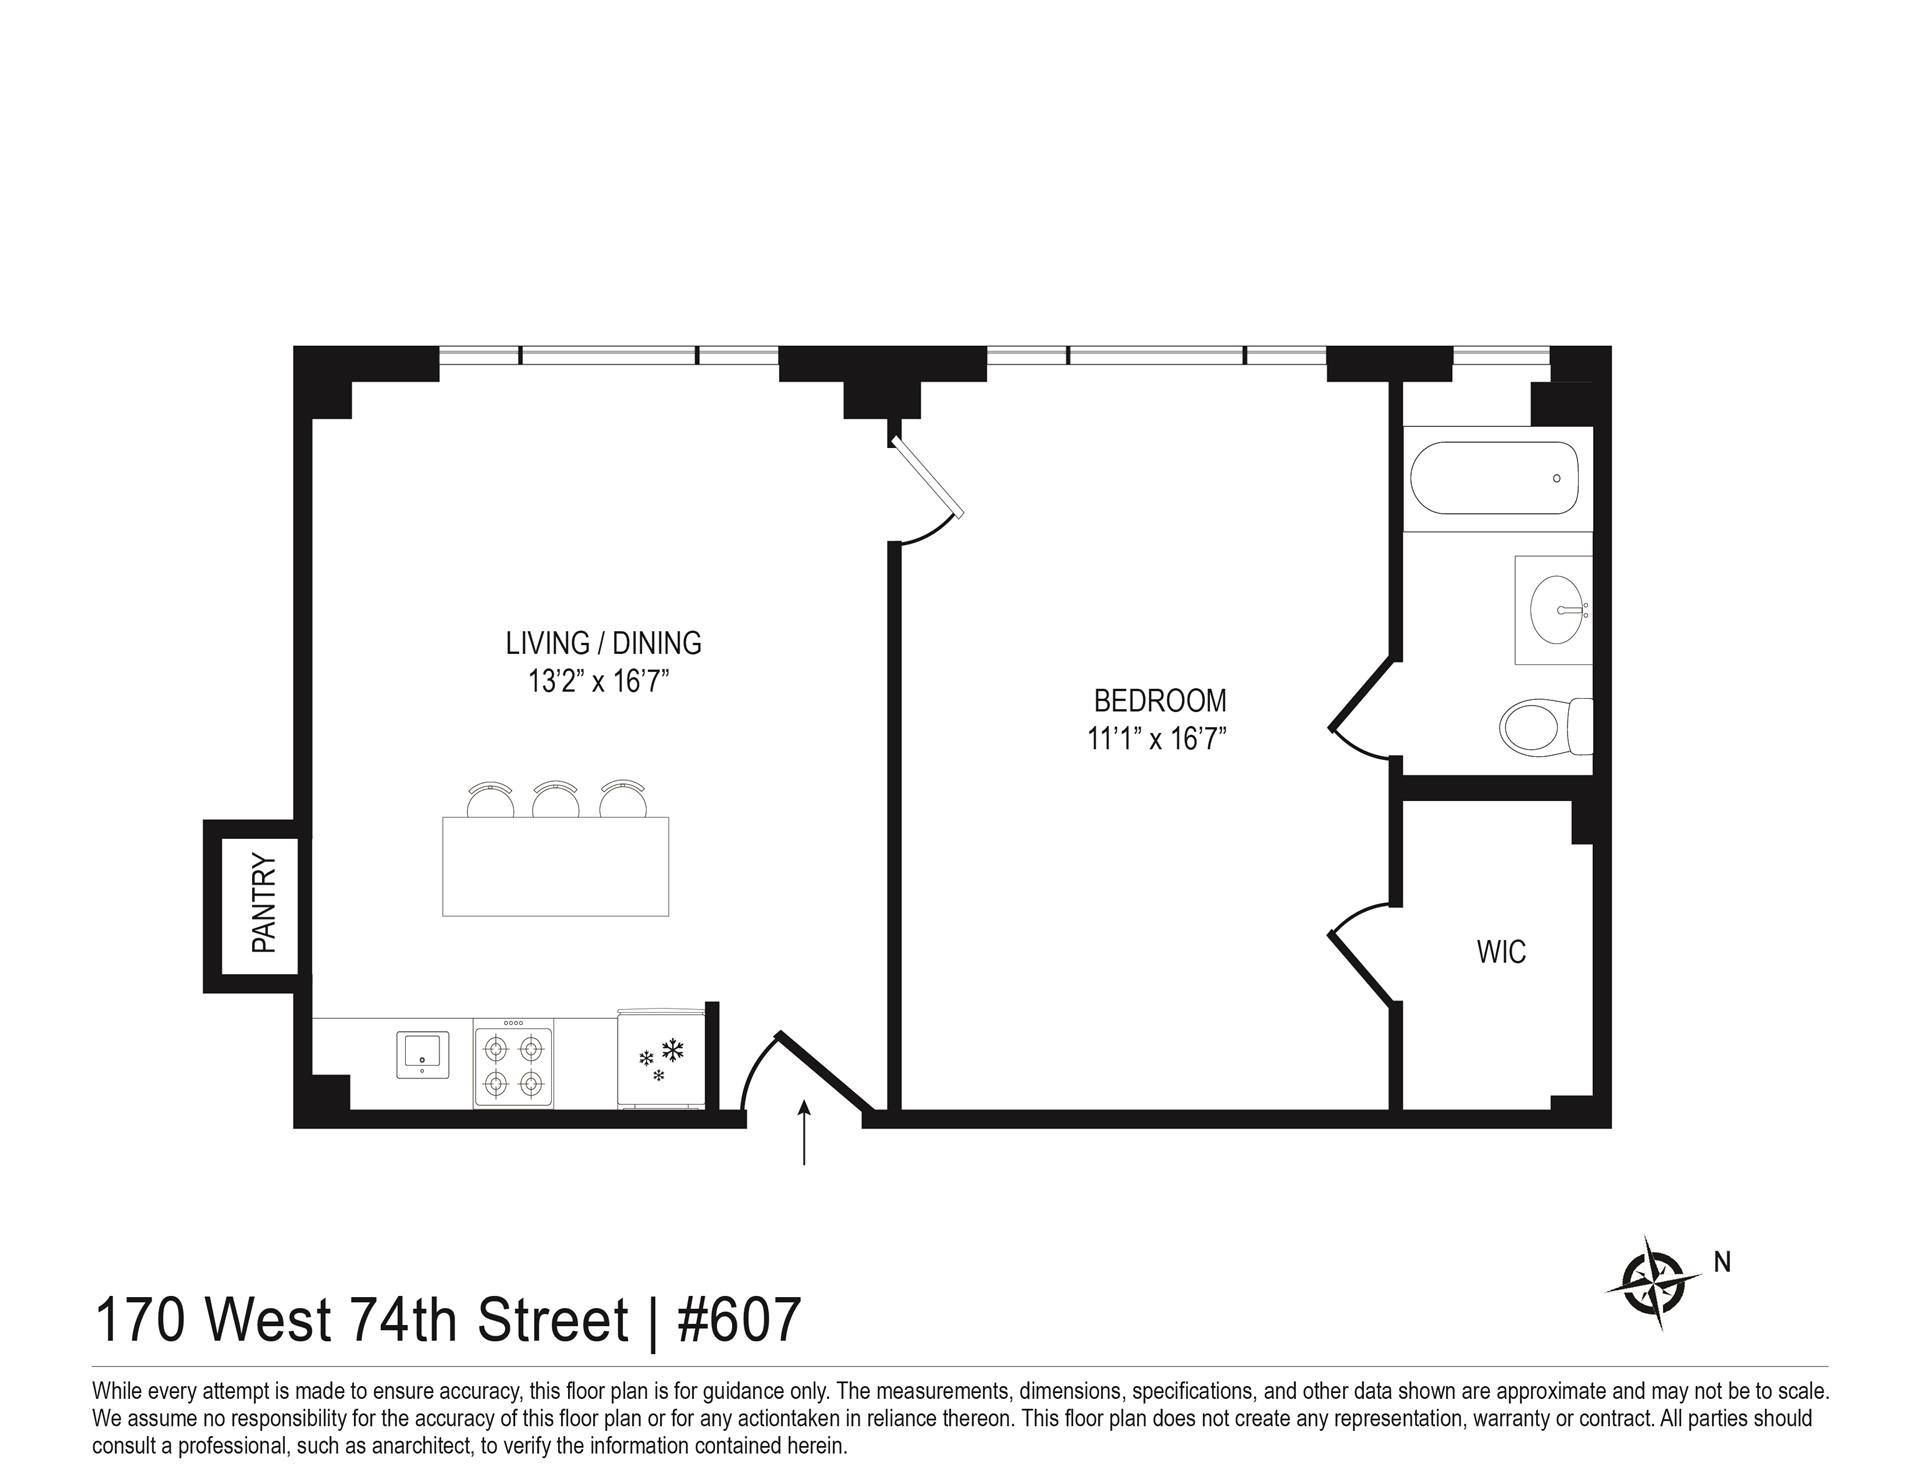 Floorplan for 170 West 74th Street, 607